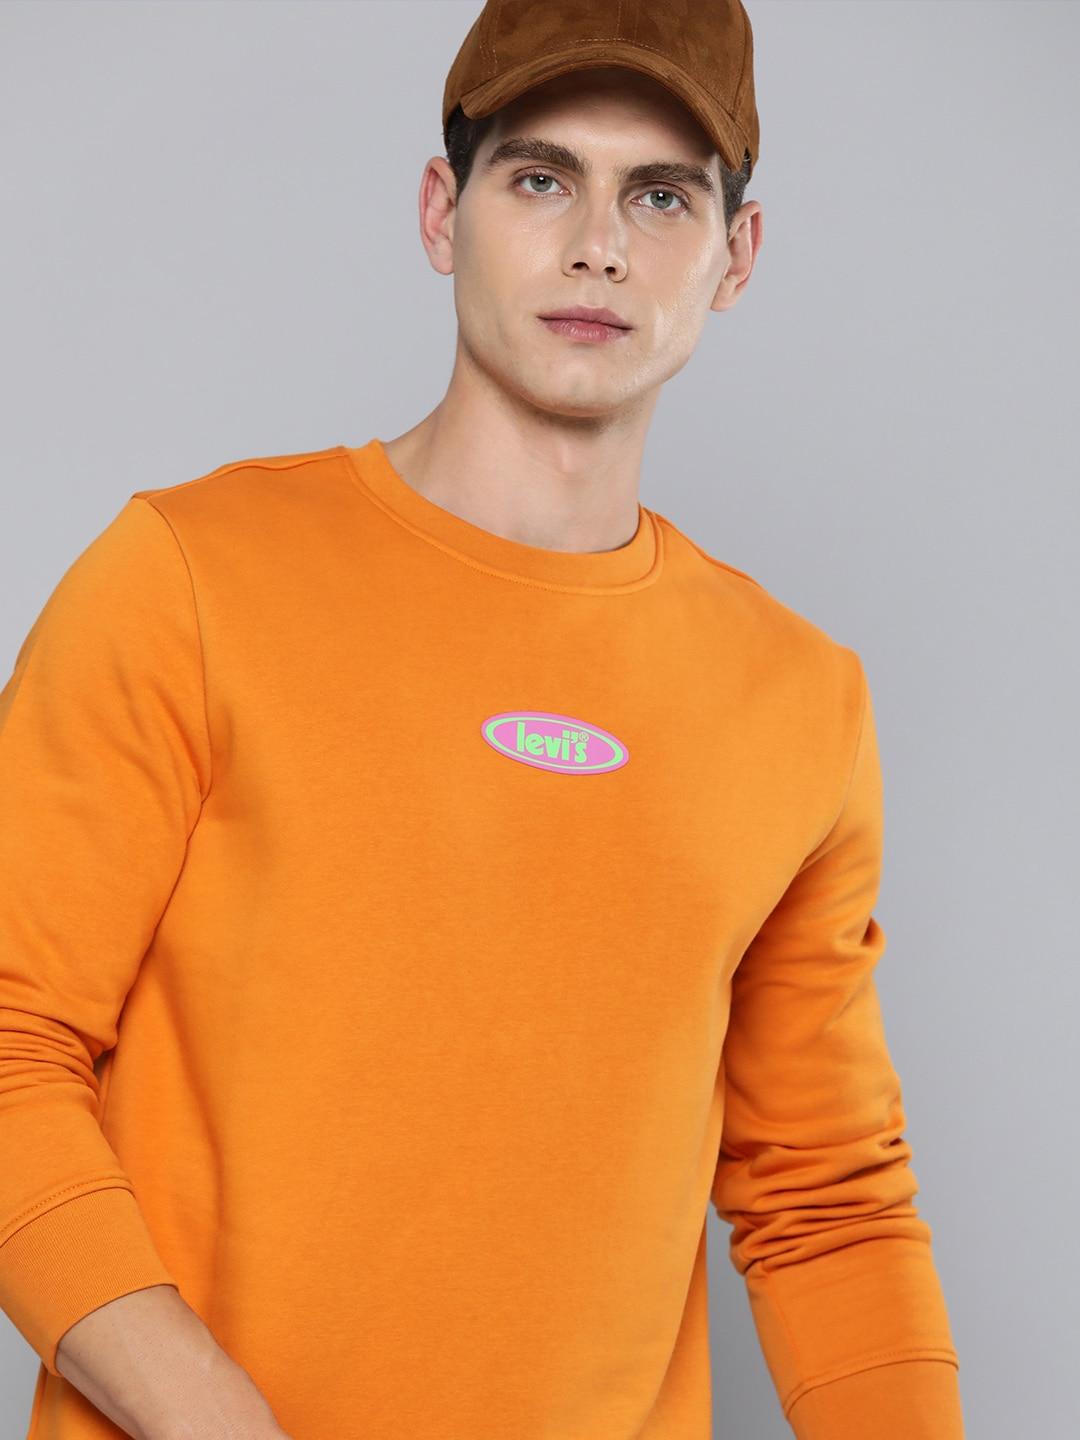 levis brand logo printed pullover sweatshirt